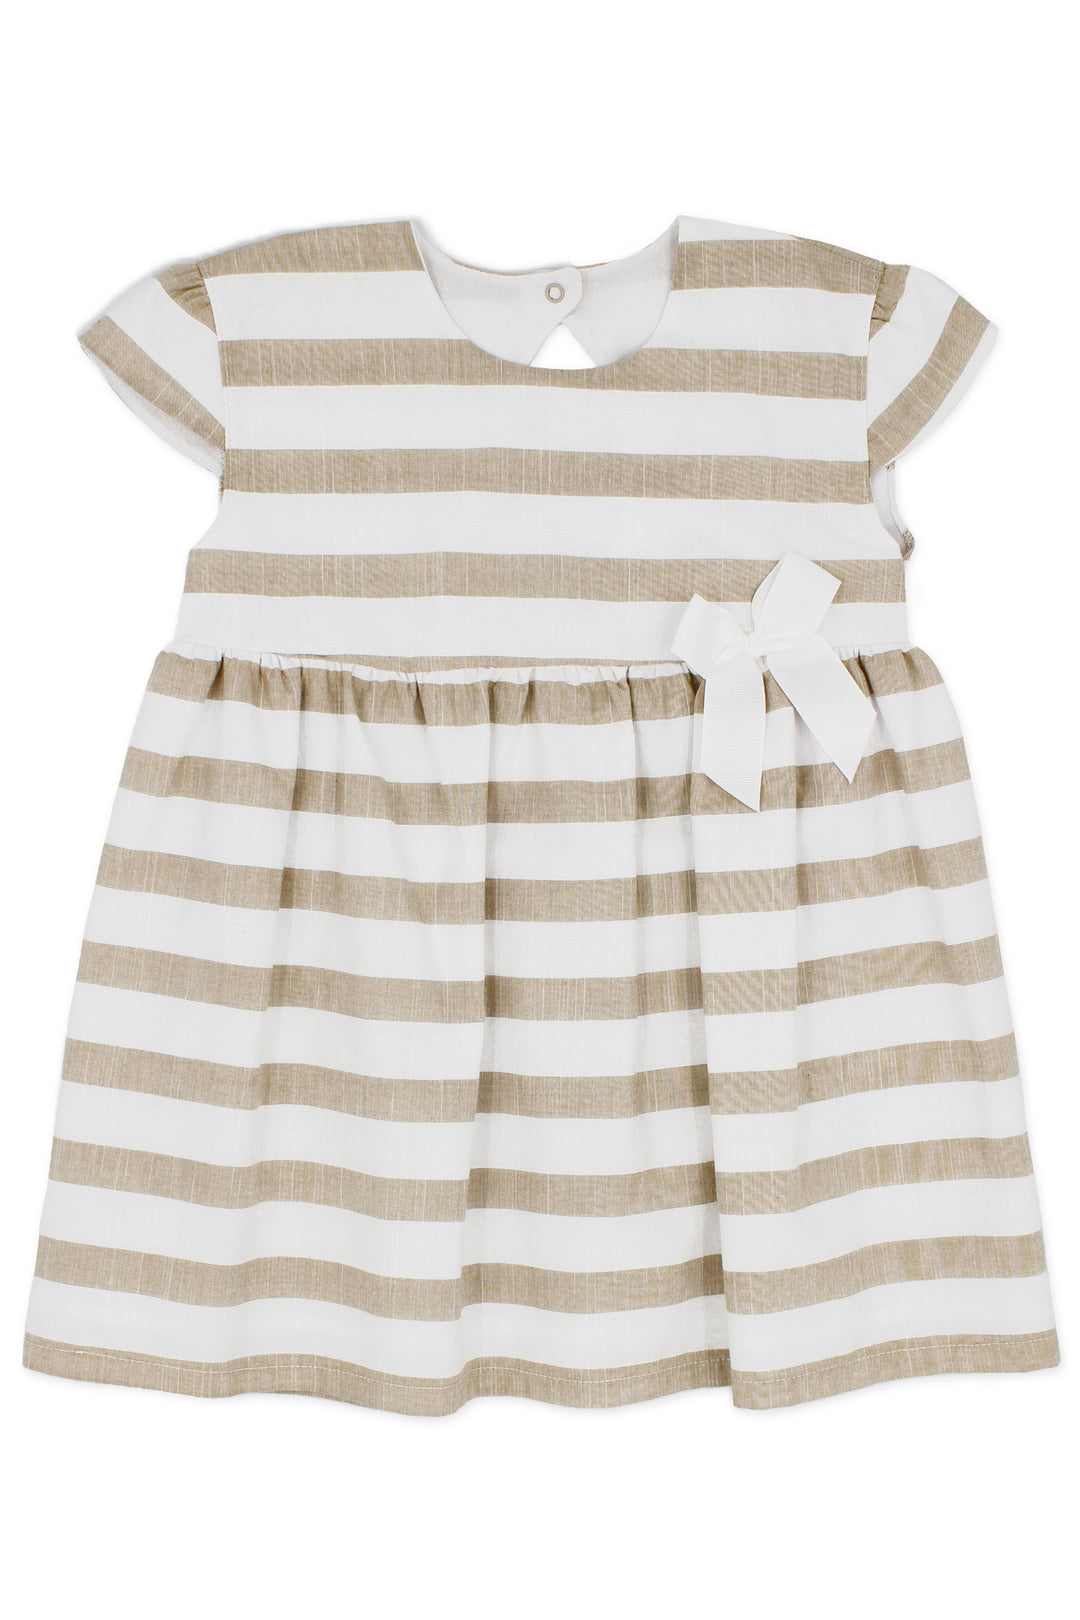 Rapife "Bethany" Beige Stripe Dress | Millie and John